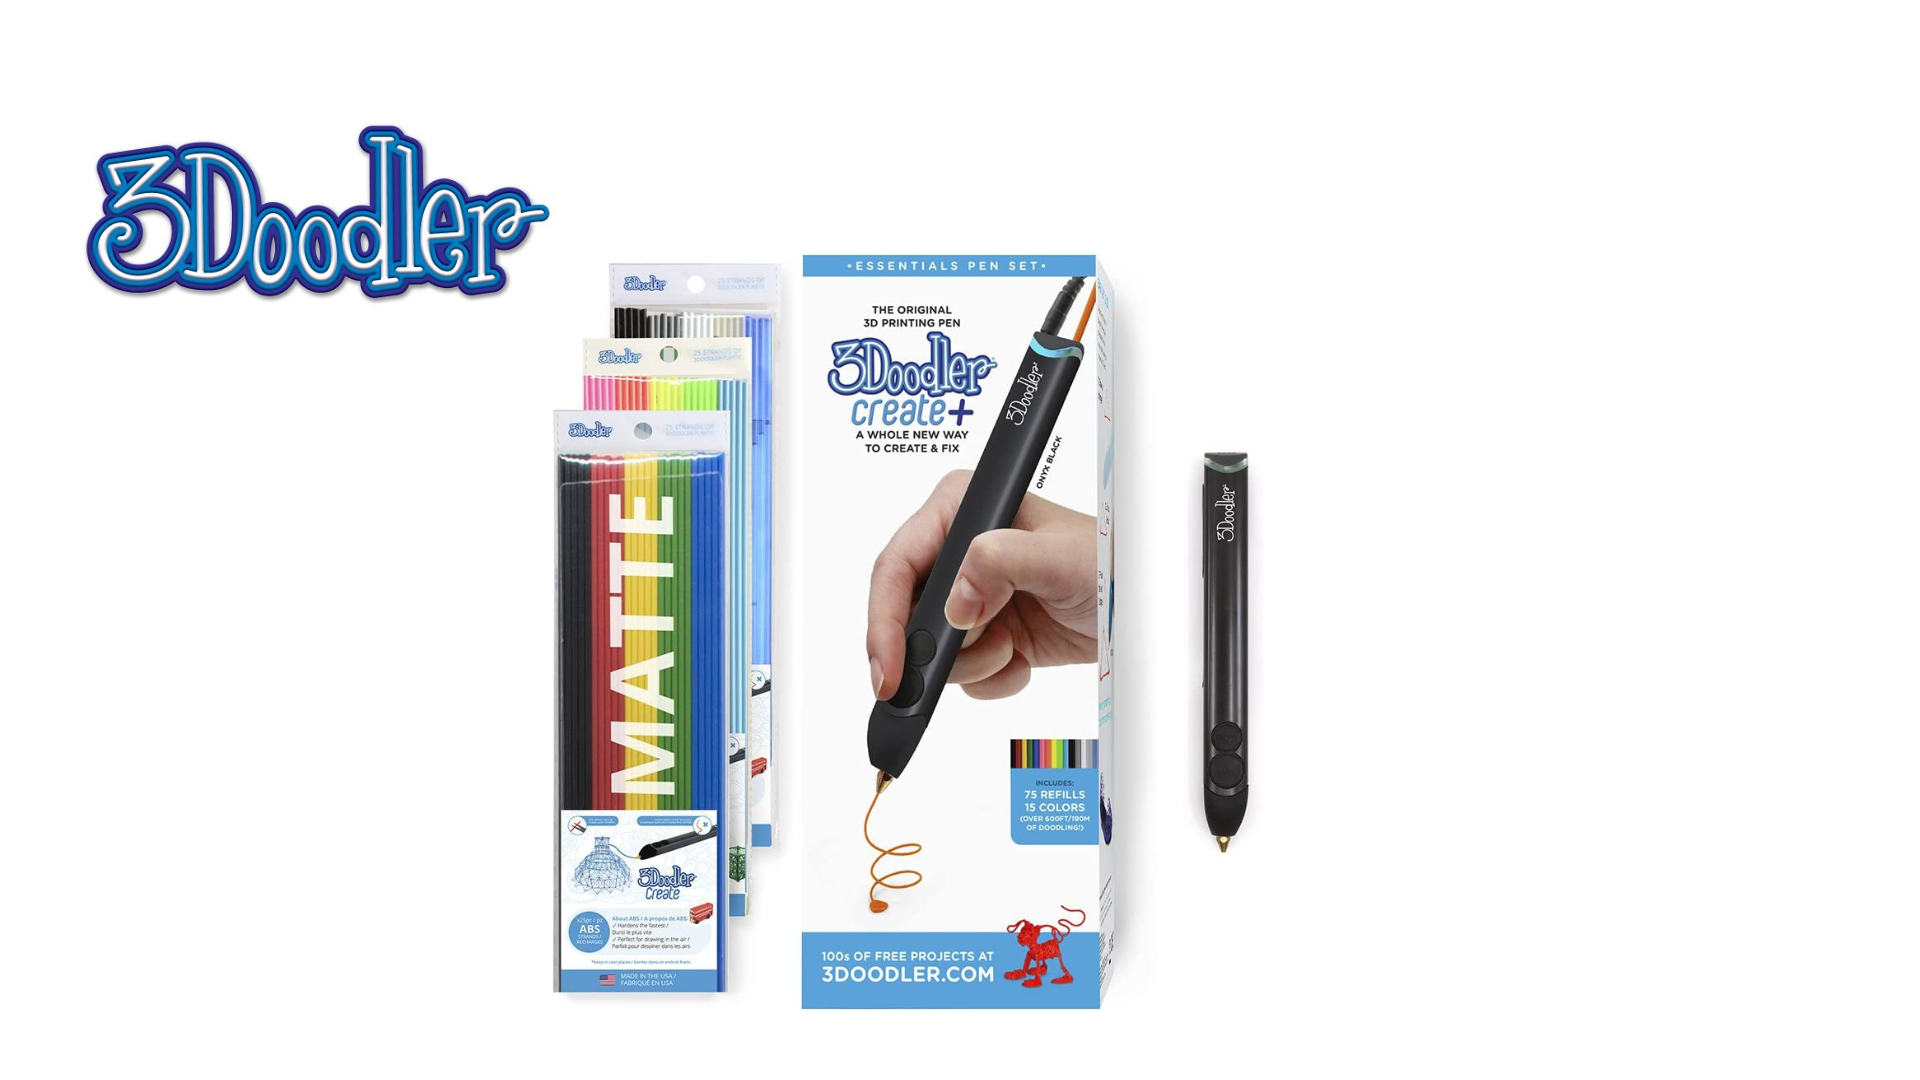 3Doodler Create+ Pen